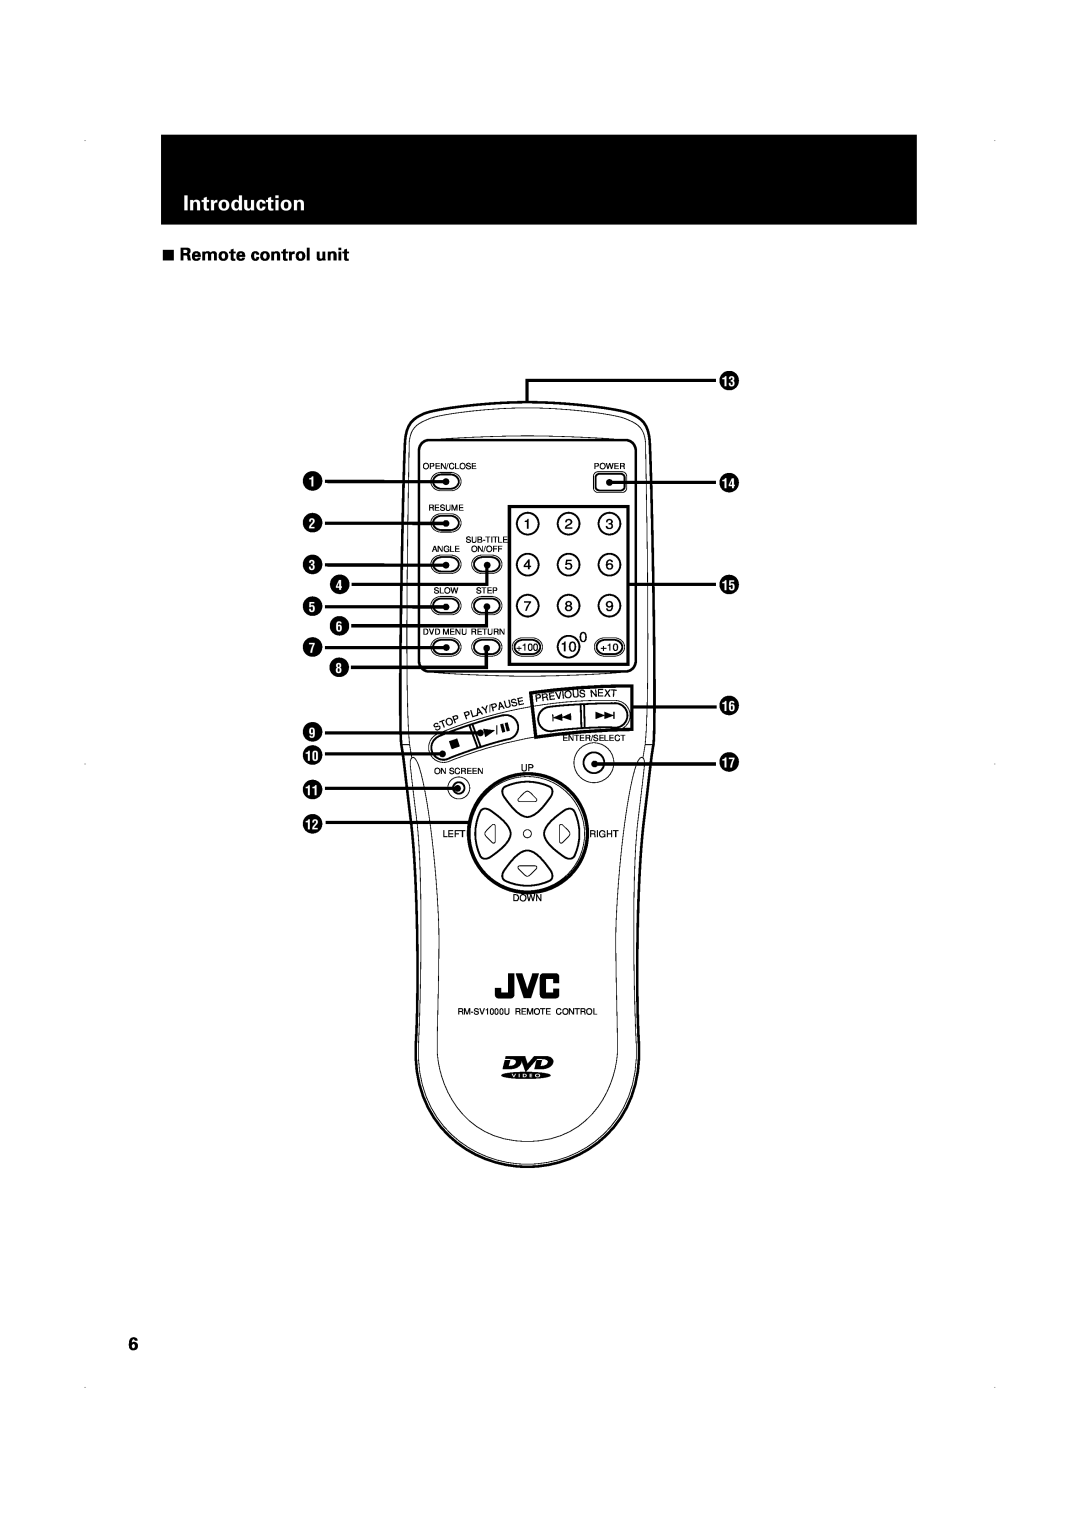 JVC XV-1000BK manual Introduction, 1 2 3 4 5 6 7 8 